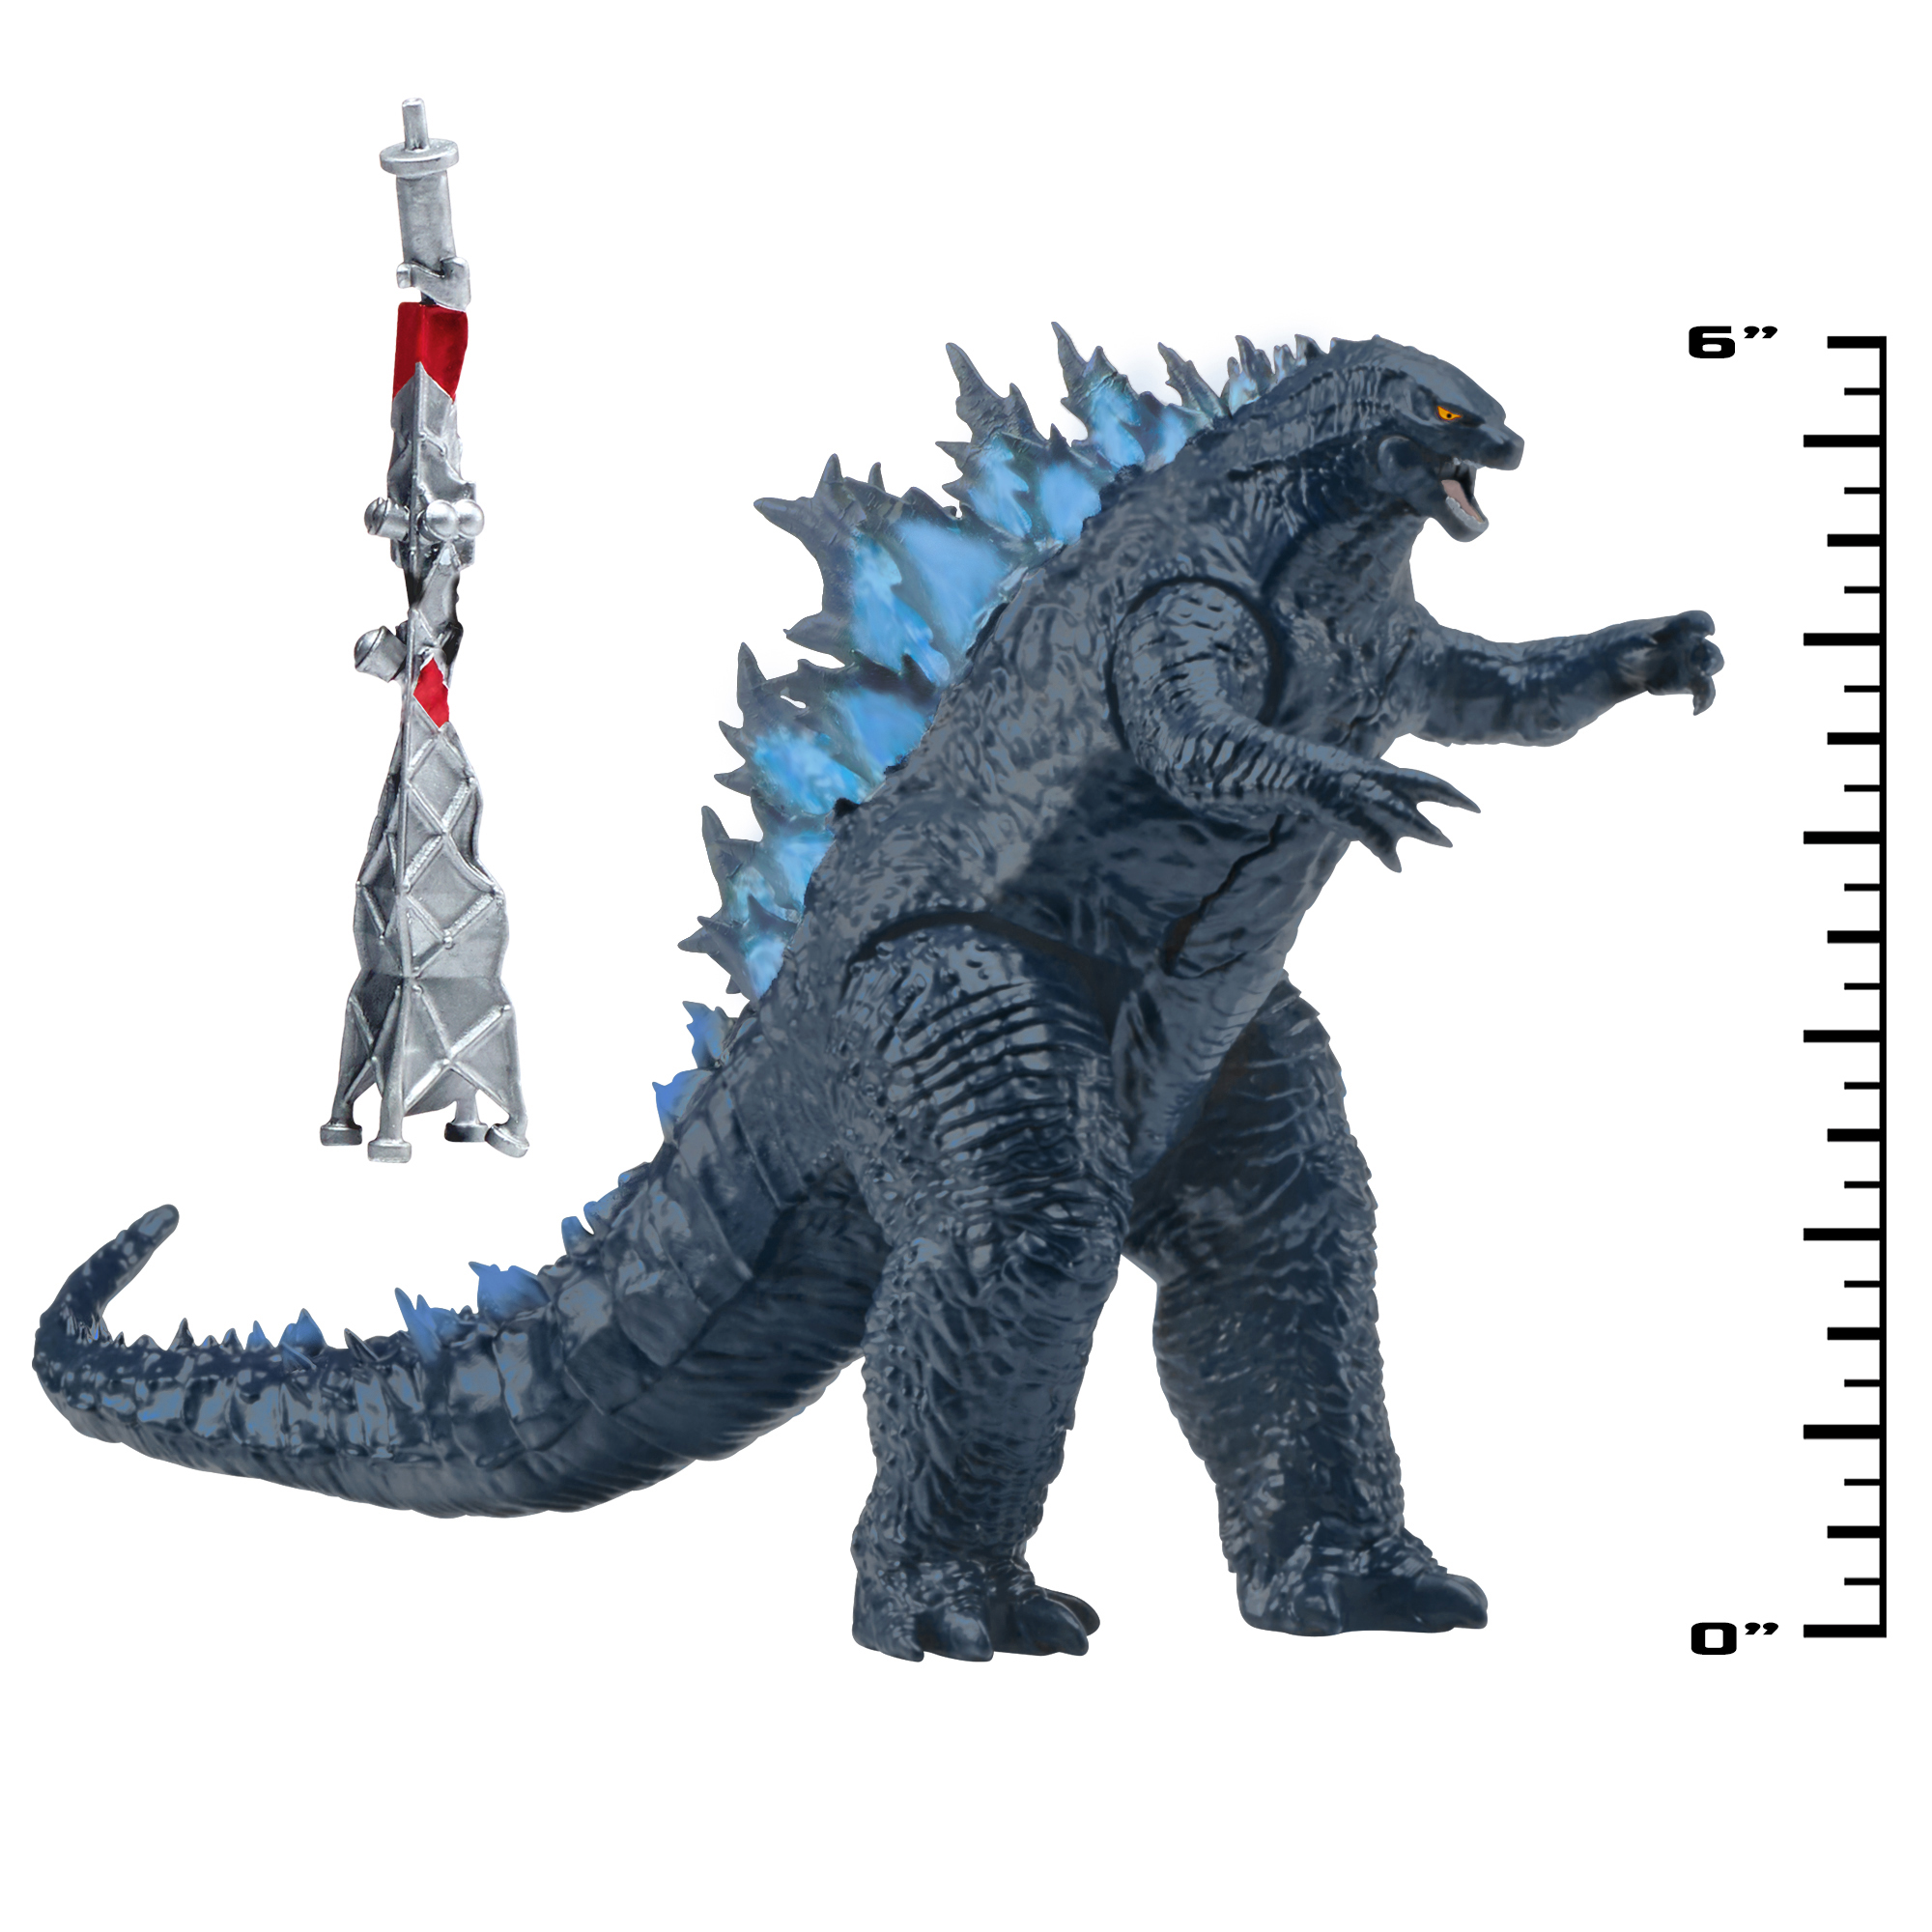 https://www.scifijapan.com/images/Godzilla/GodzillavsKong-PlaymatesGodzillaRadioTower02.jpg